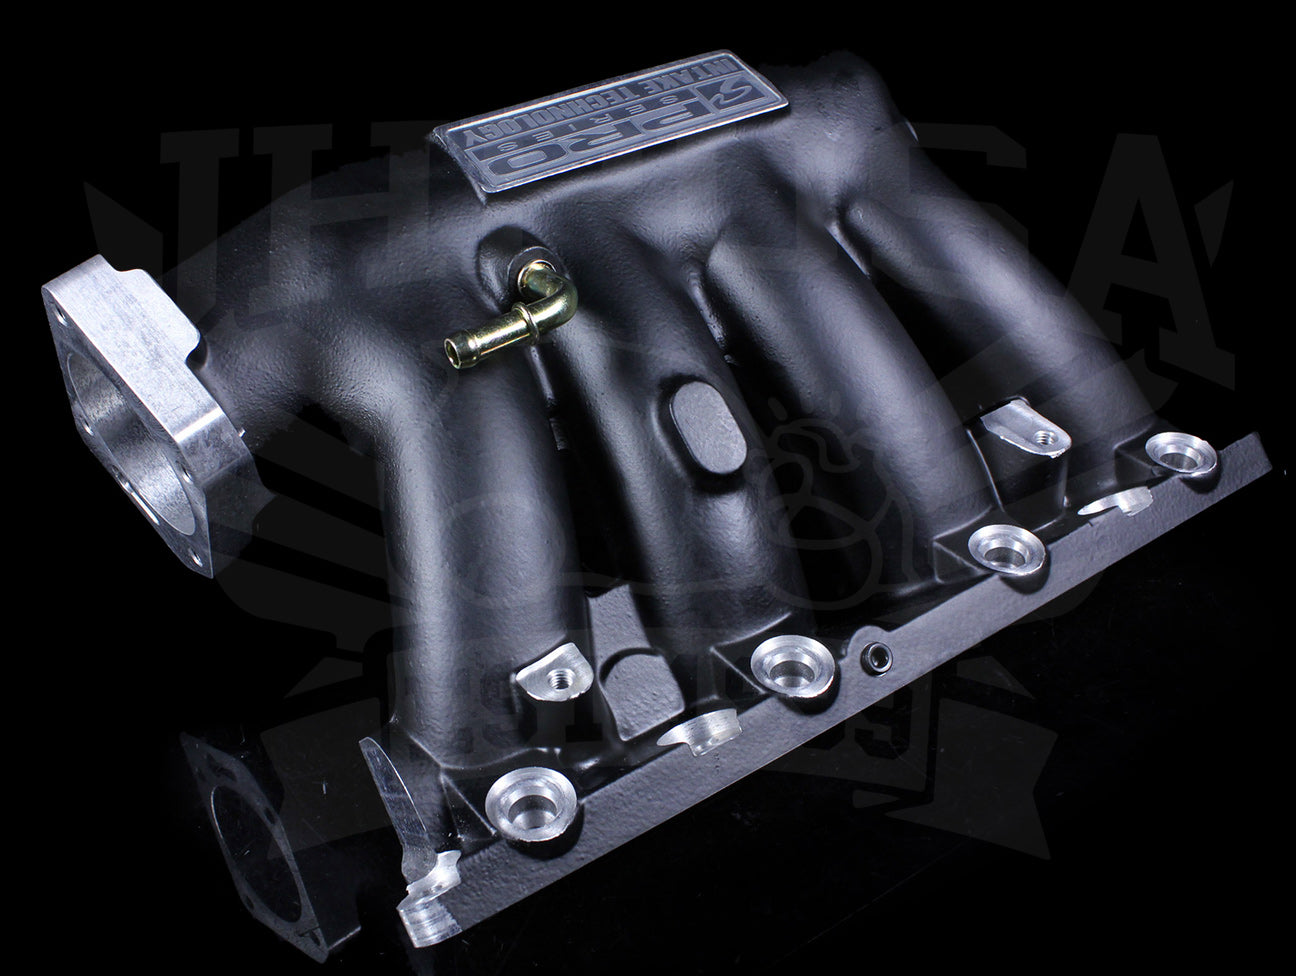 Skunk2 Pro Series Intake Manifold - Black - K-series / 06-11 Civic Si (K20Z3)